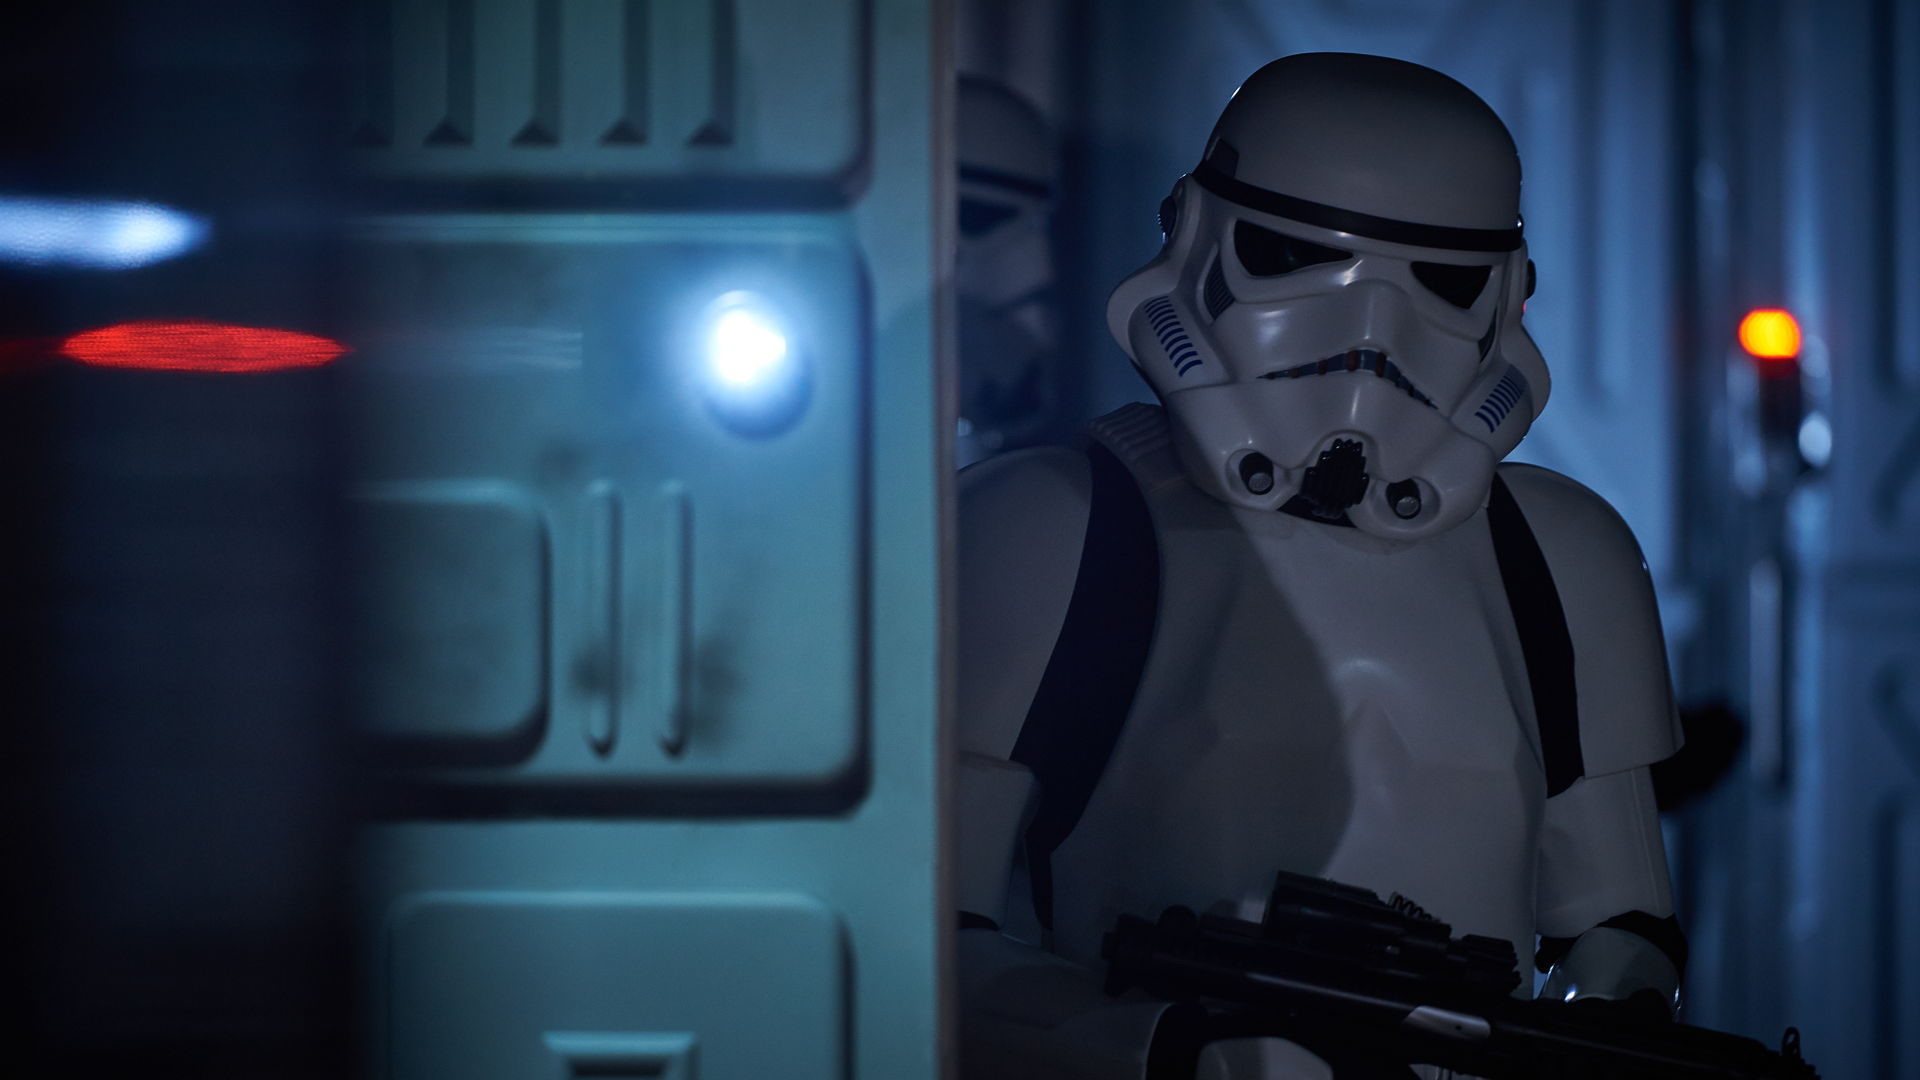 Stormtrooper on the set of Rebellion - FXhome Star Wars-inspired fan film